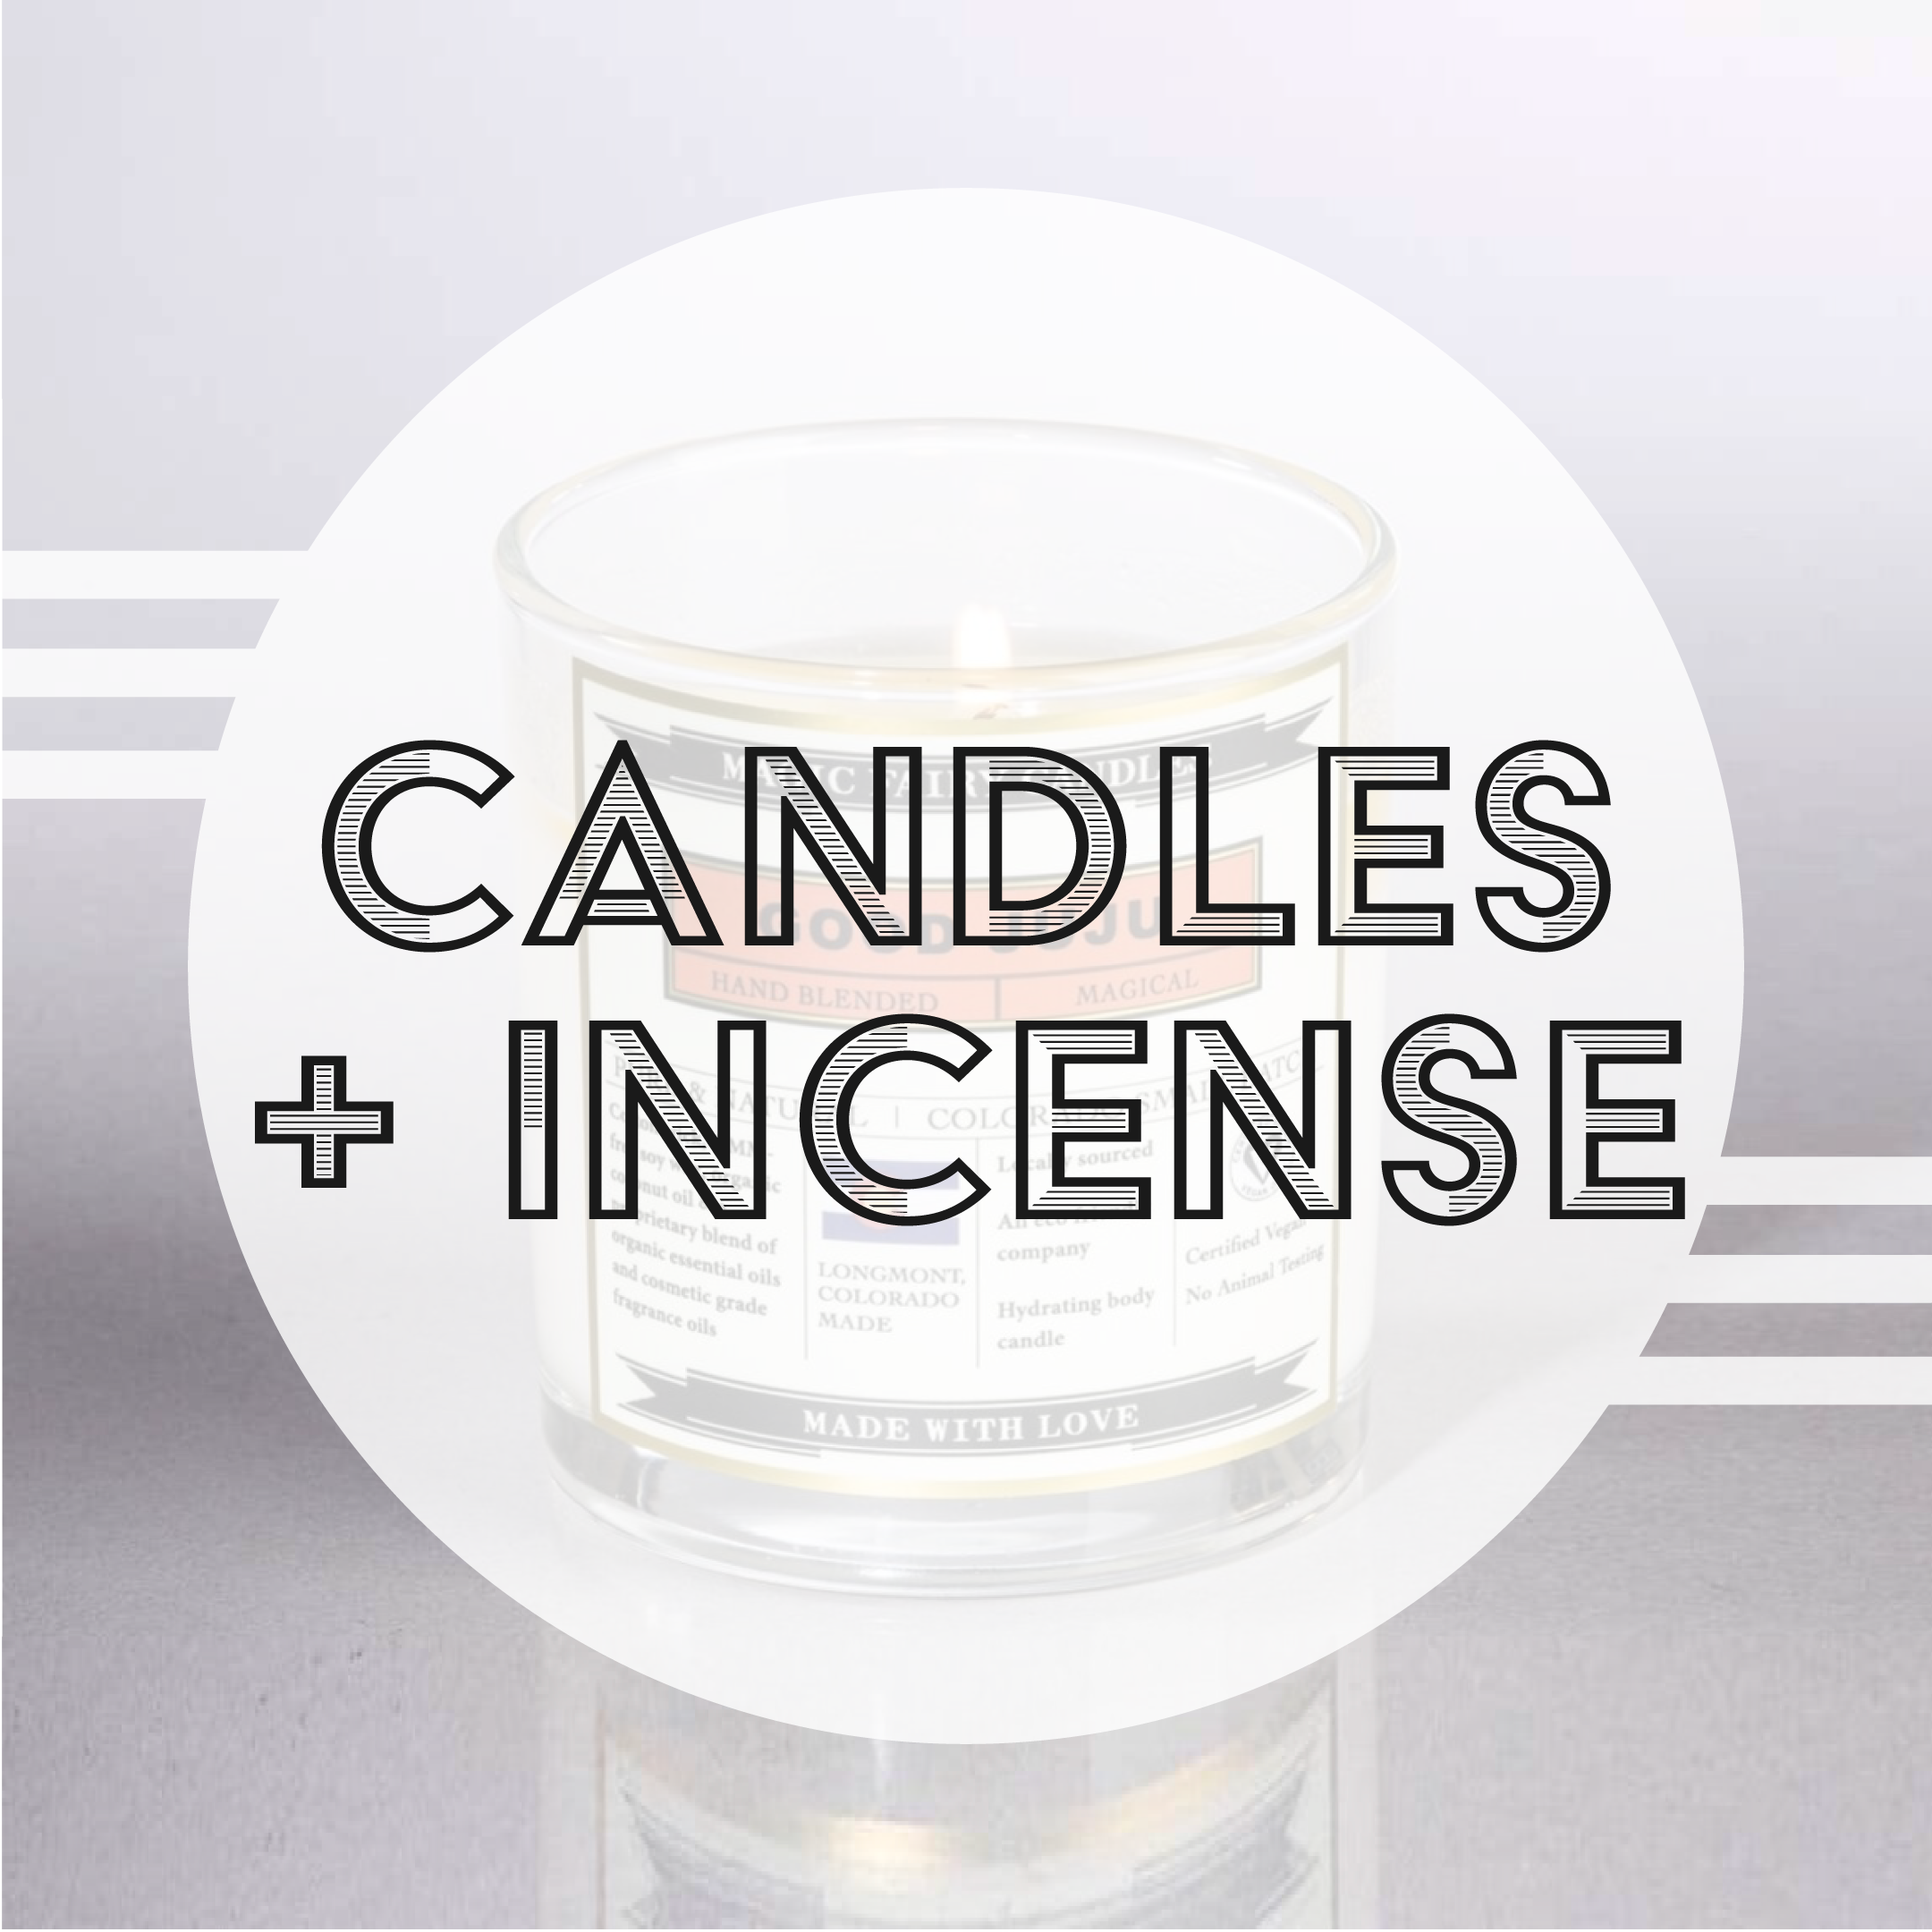 PHLOX IGH Candles Incense@2x.png